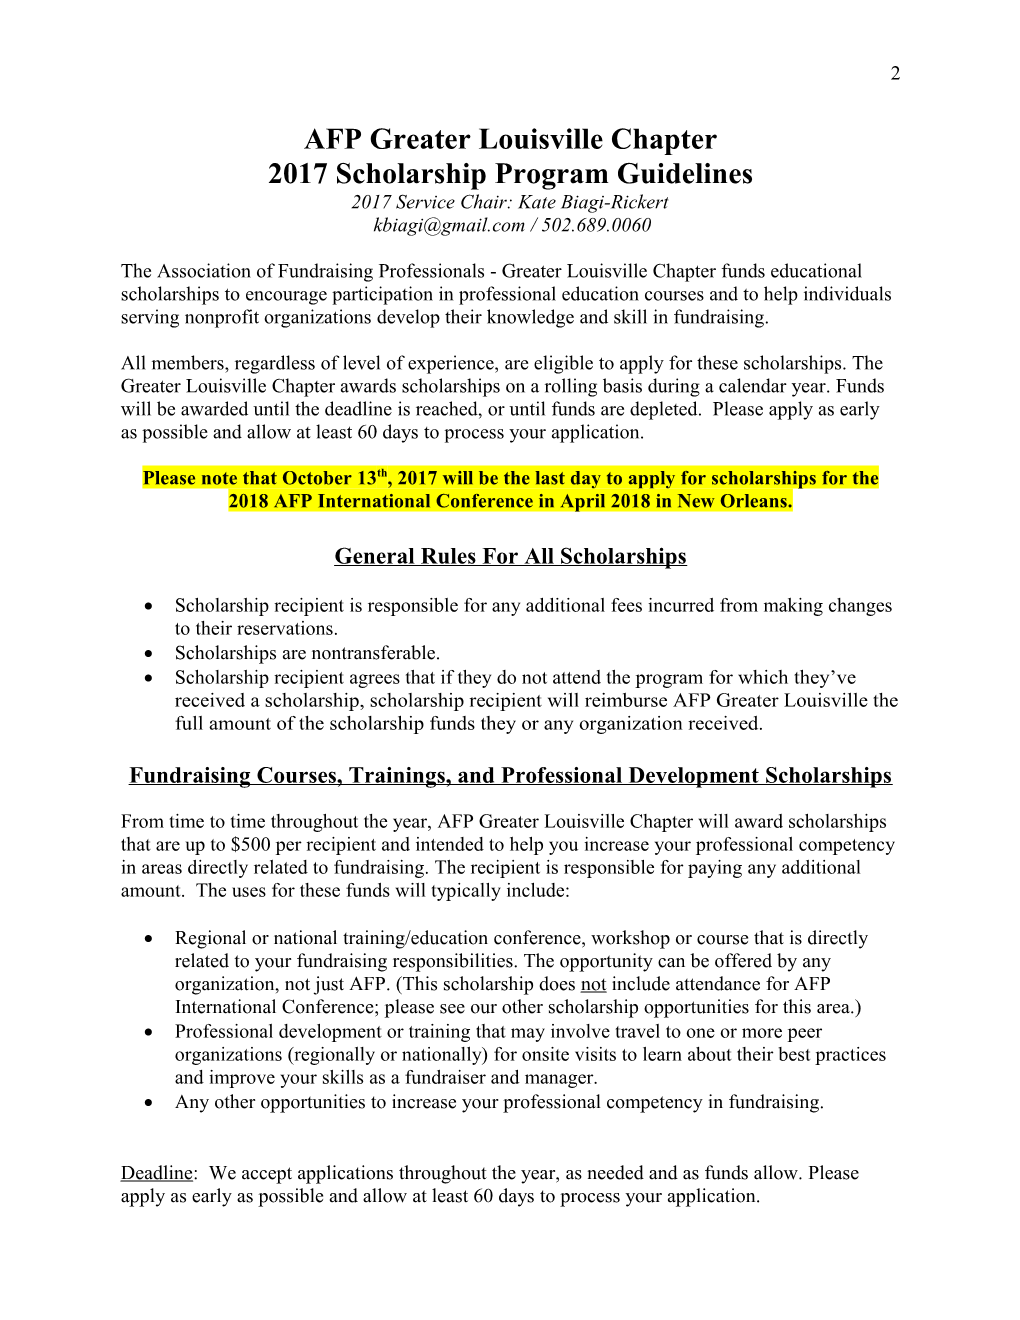 2017 Scholarship Program